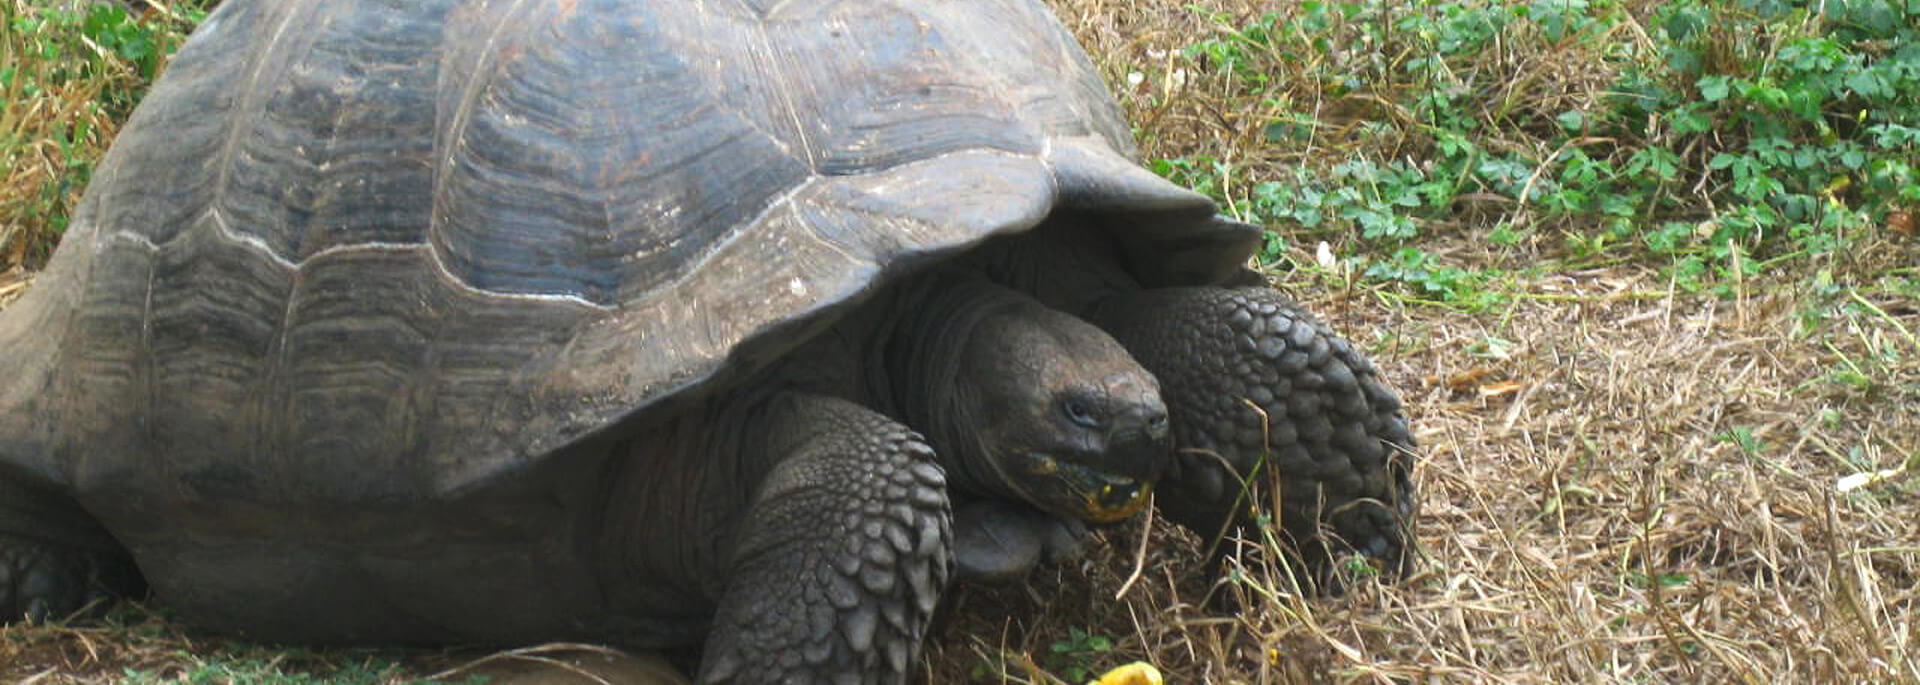 Fotos: Galapagos-Schildkröten